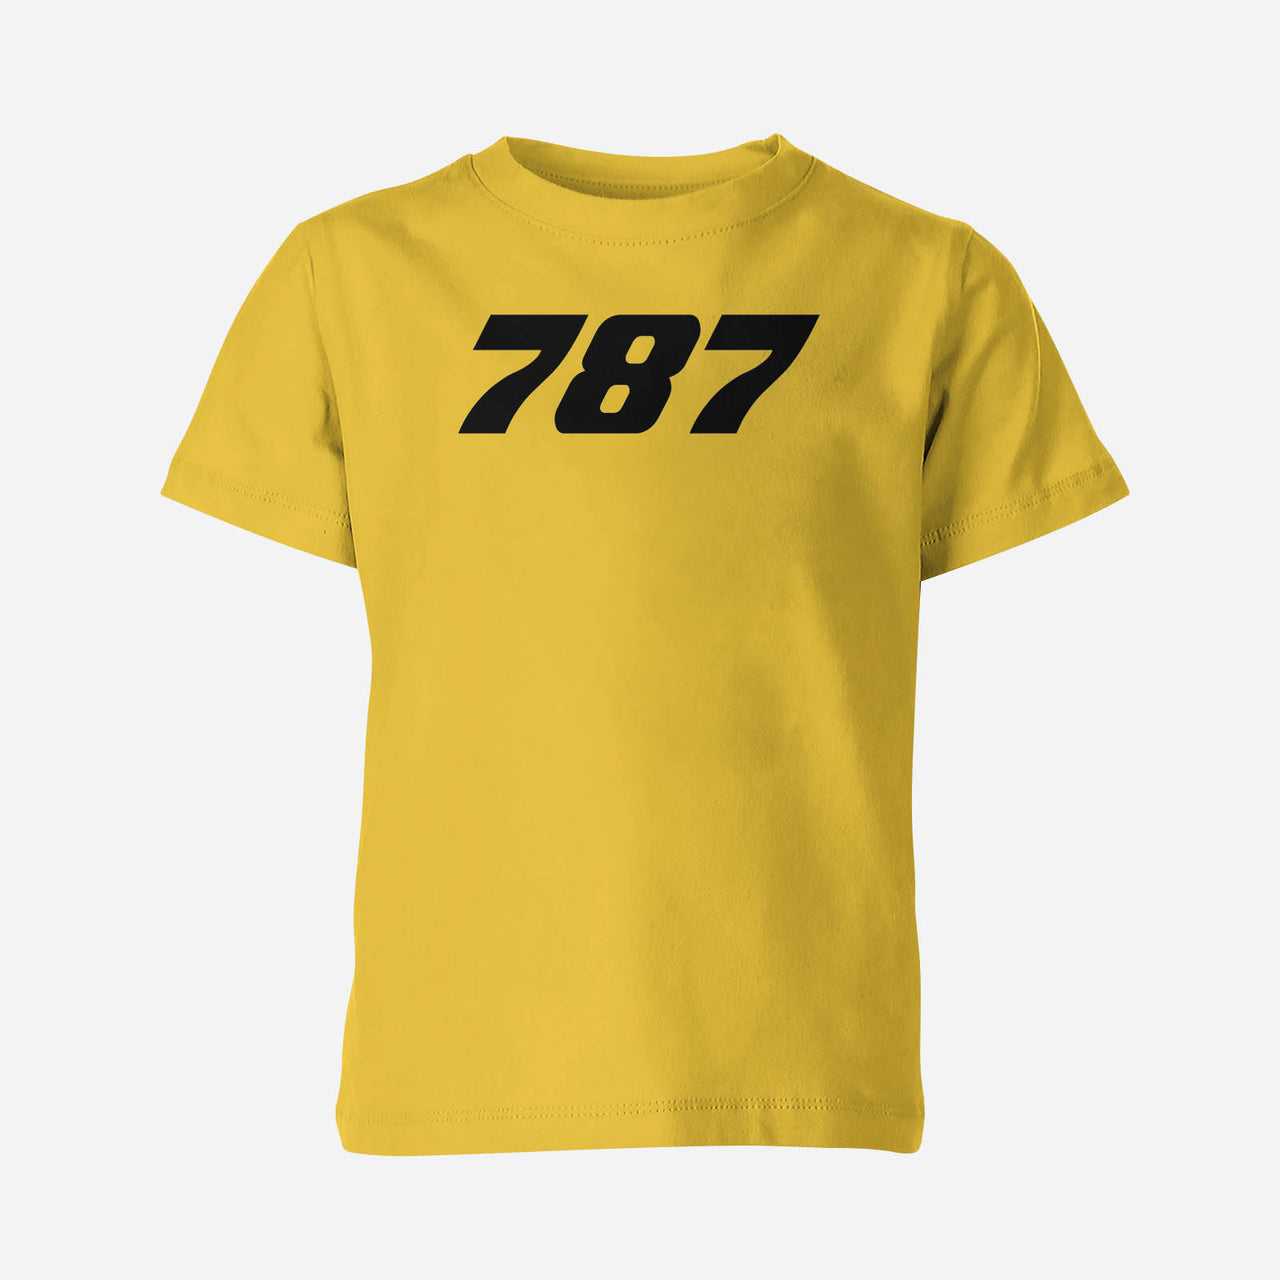 787 Flat Designed Children T-Shirts